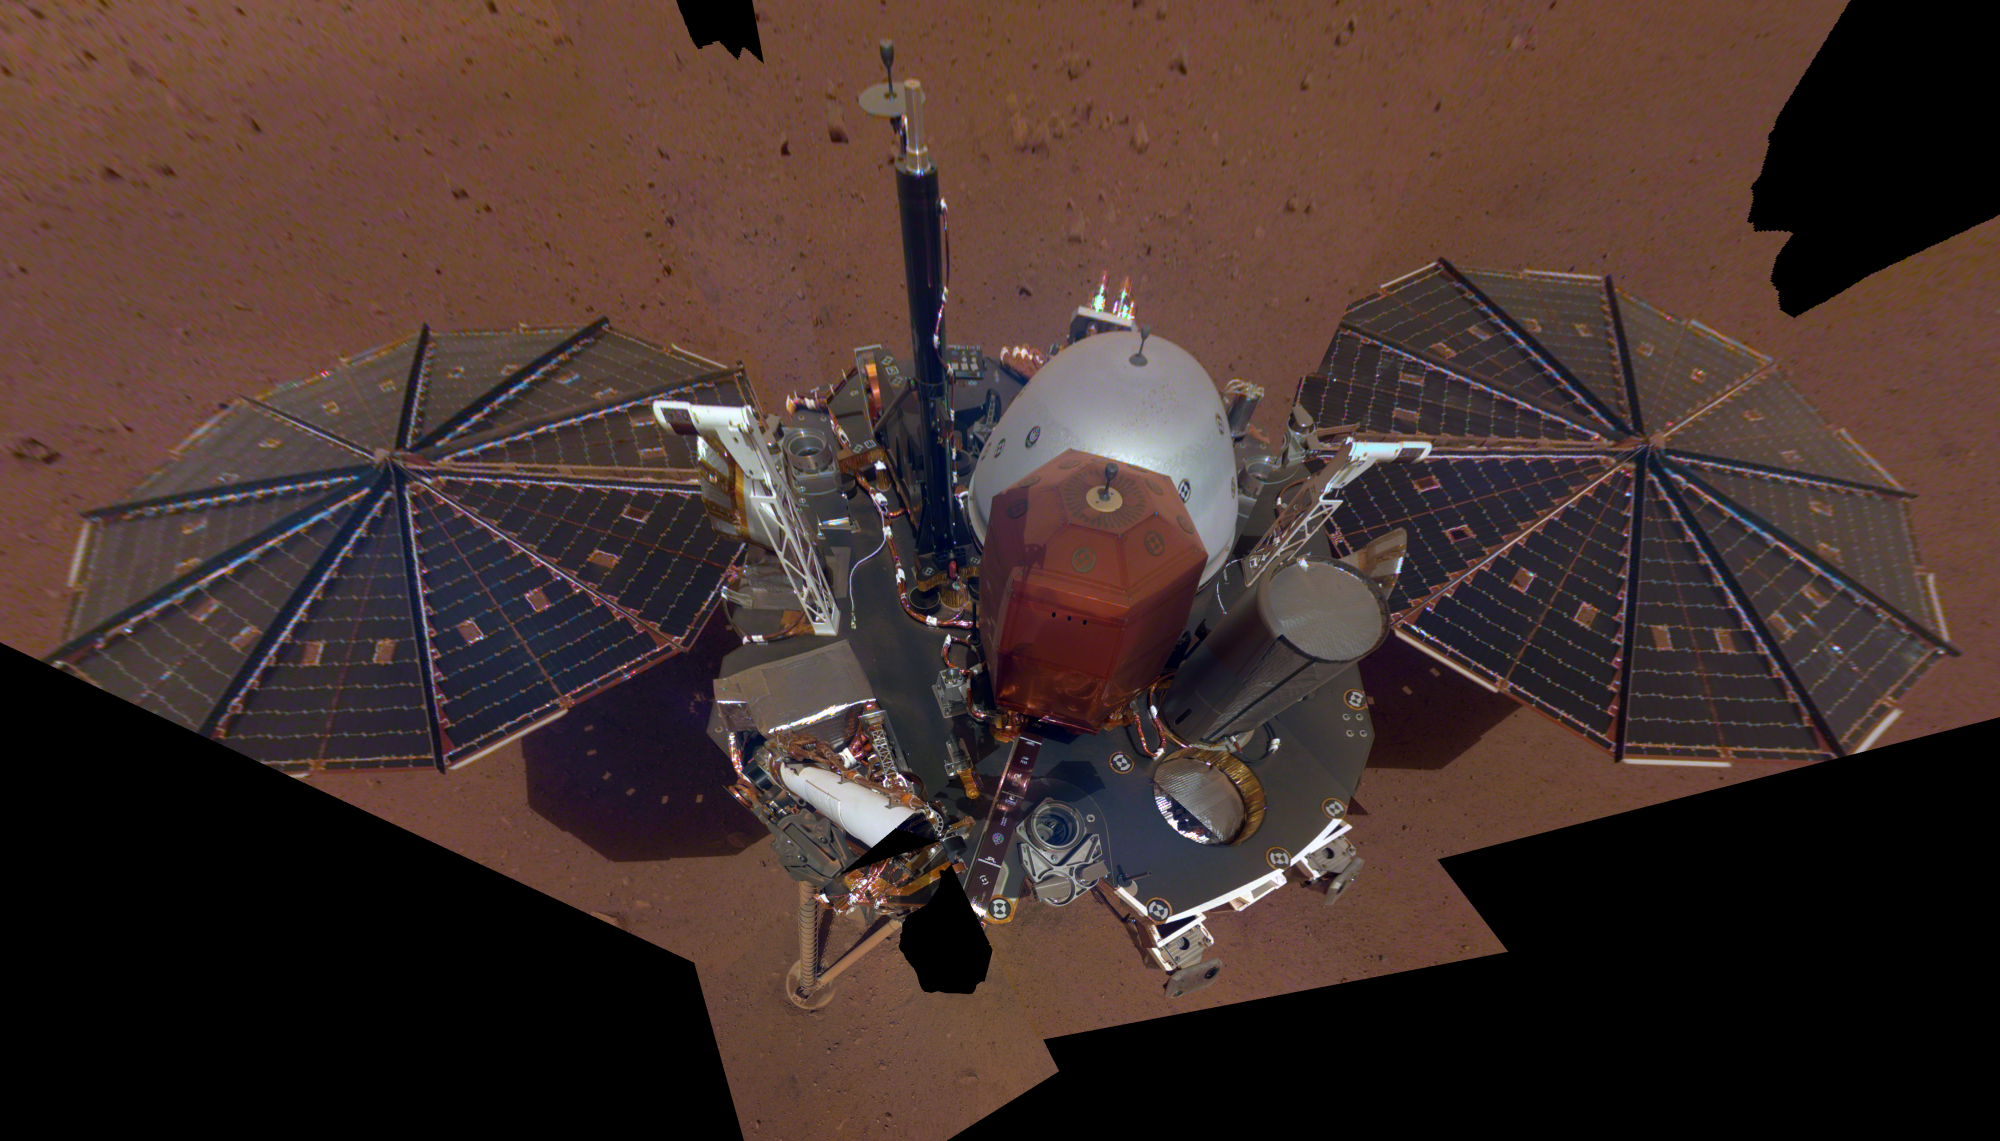 Insight lander collecting data on Mars